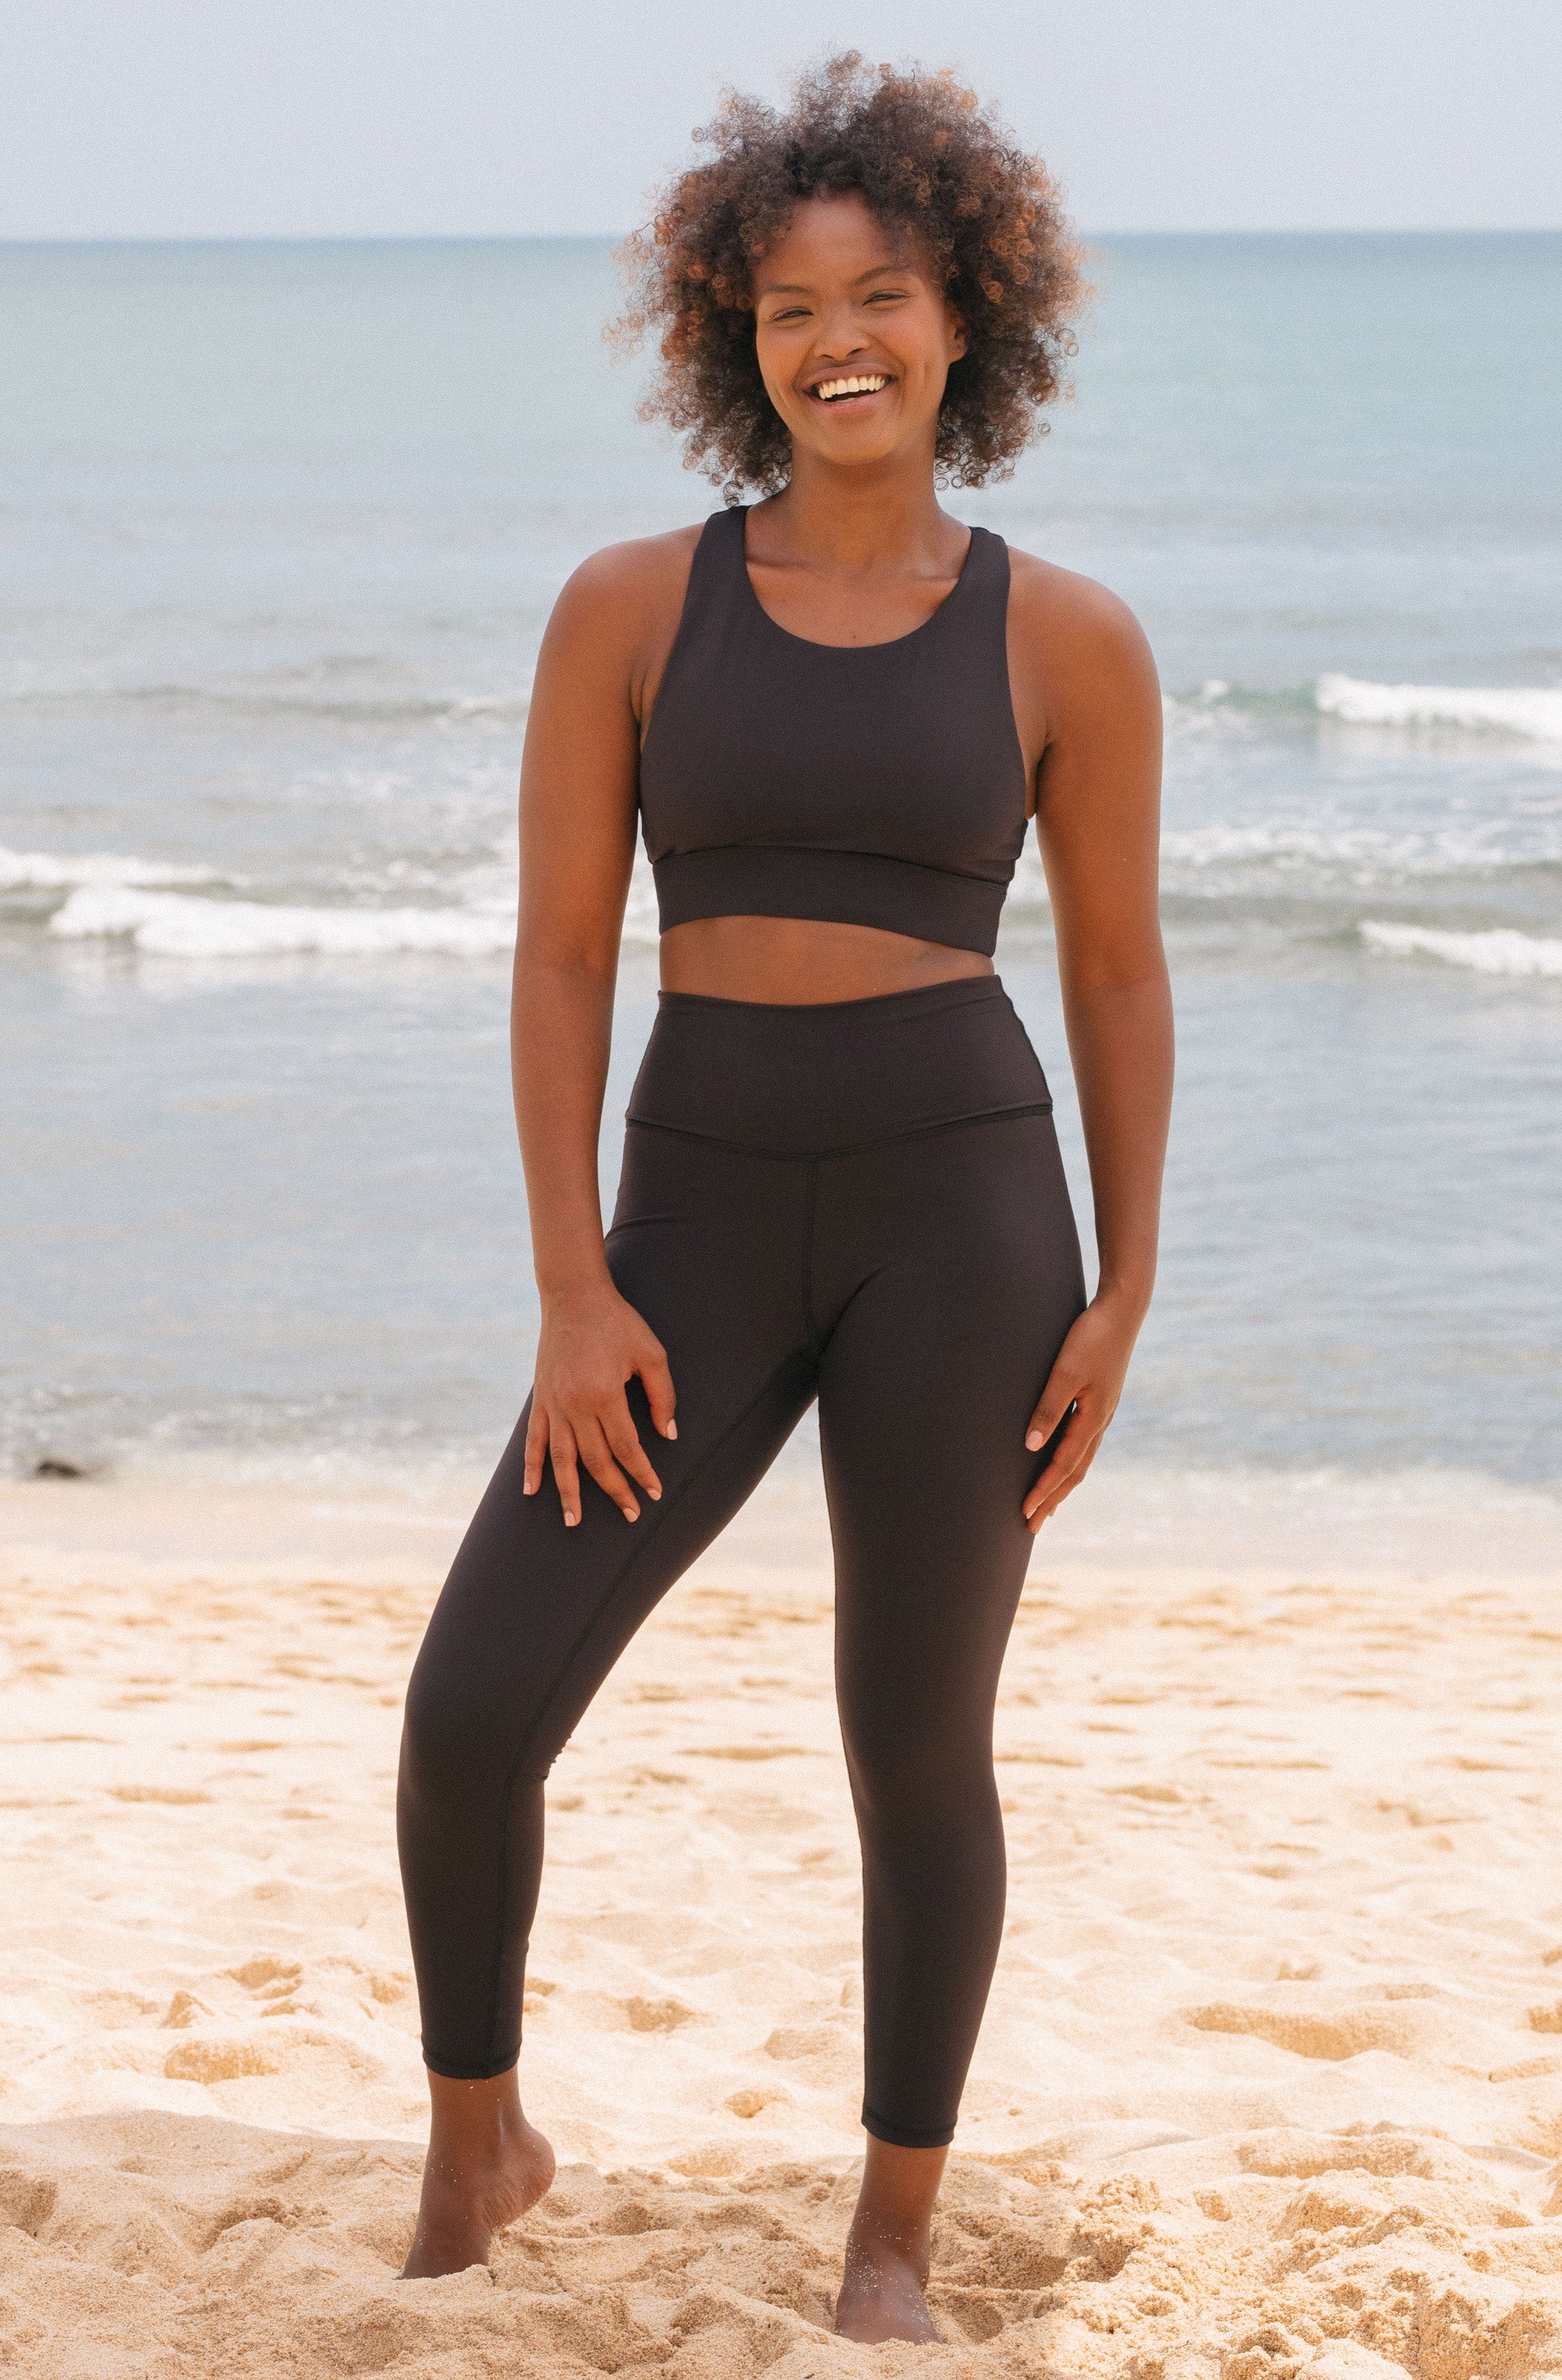 ZYIA Active Women's Black Yoga Gym Running Leggings Size 4 : r